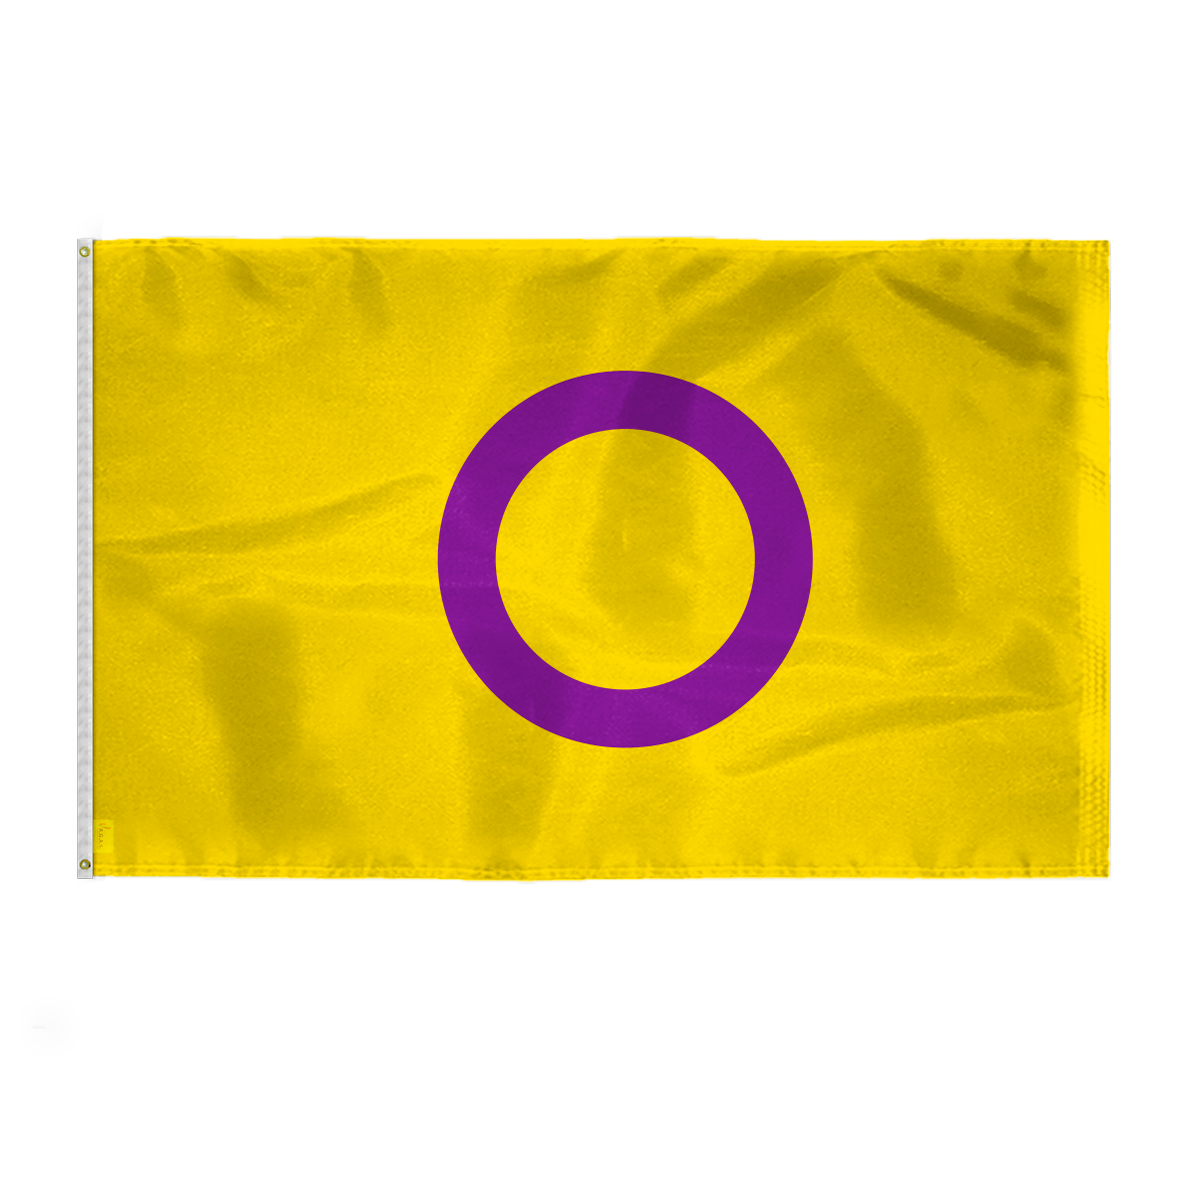 AGAS Intersex Pride Flag 4x6 Ft - Printed 200D Nylon